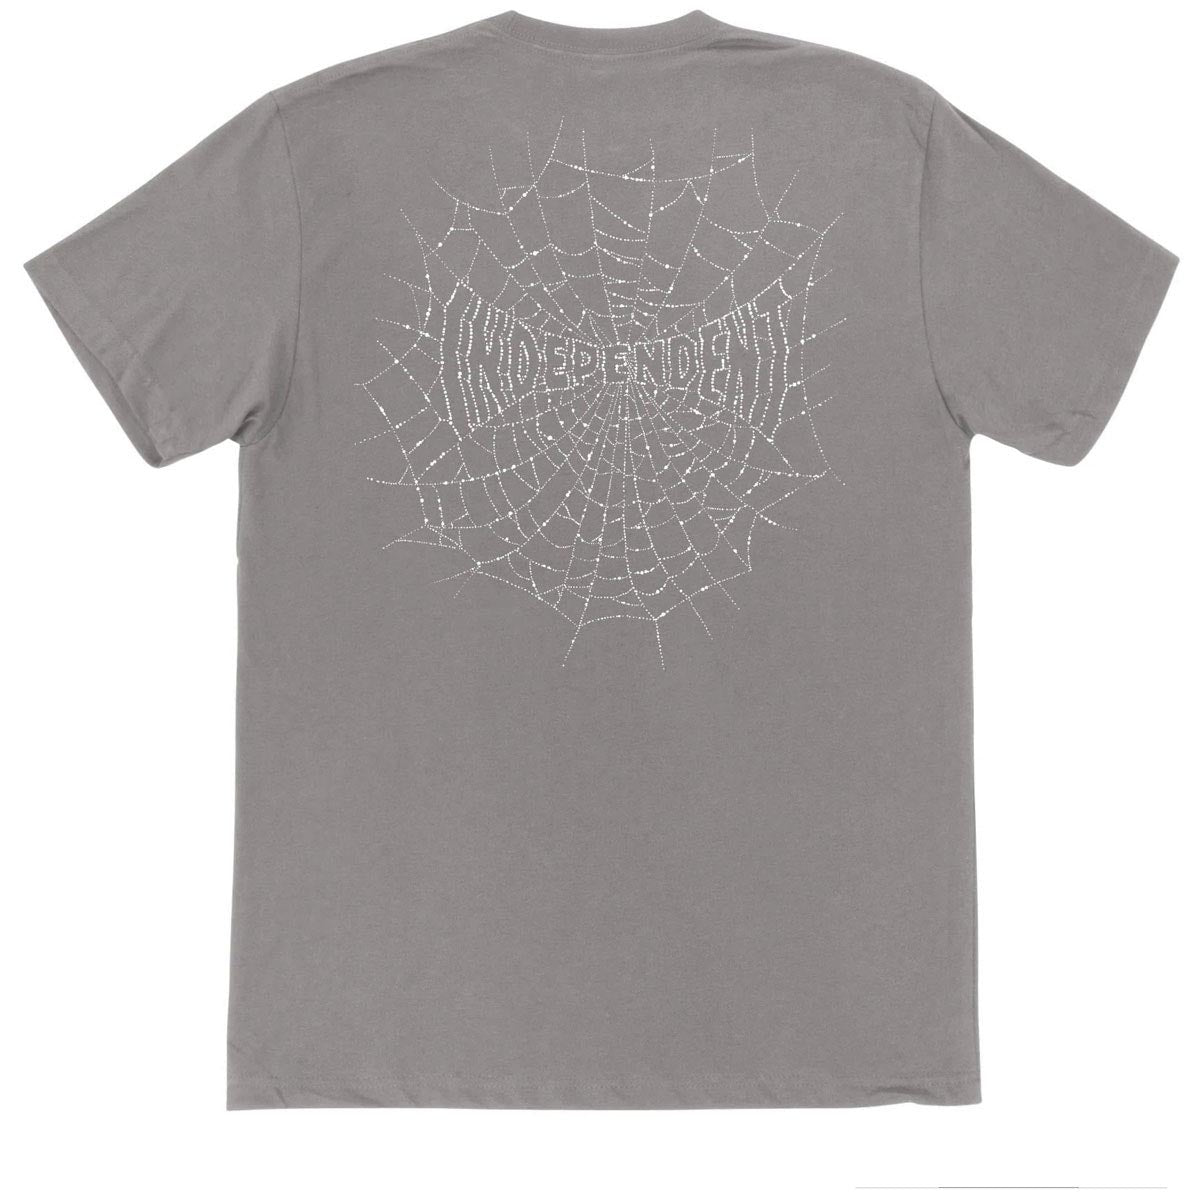 Independent Arachnid T-Shirt - Medium Grey image 1